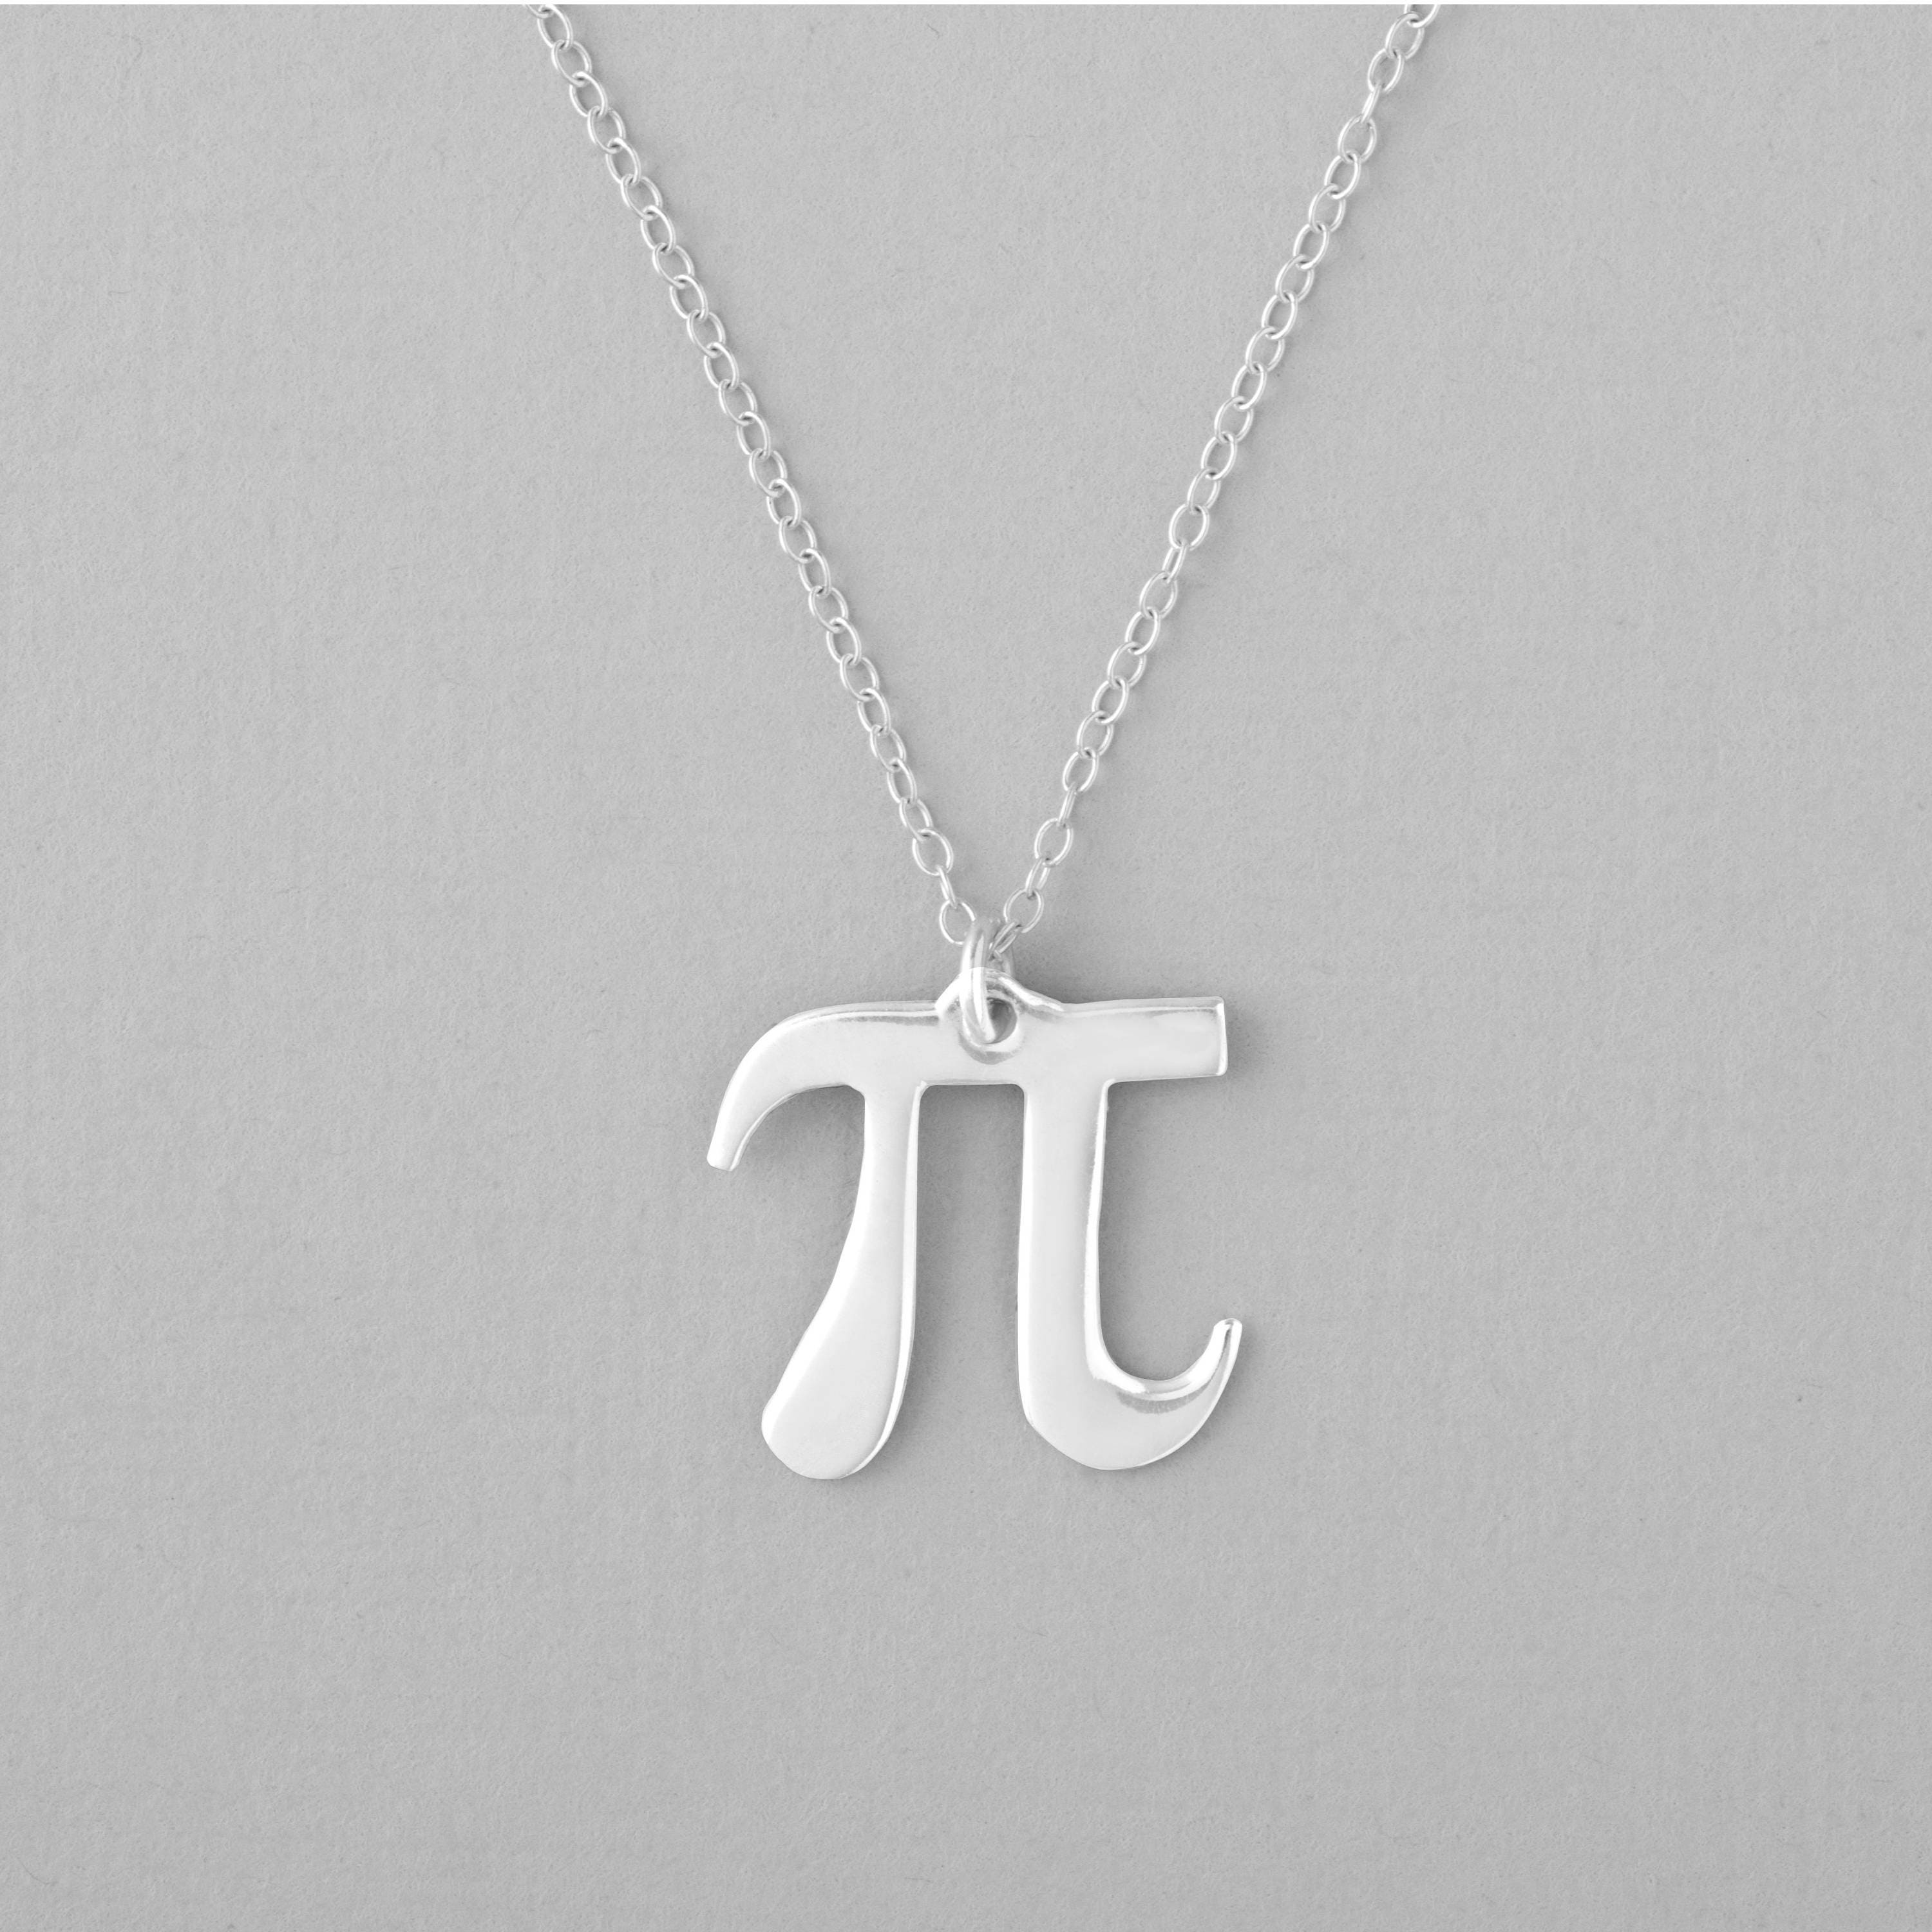 Pi Necklace Pi Jewelry Math Necklace Pi Symbol Necklace